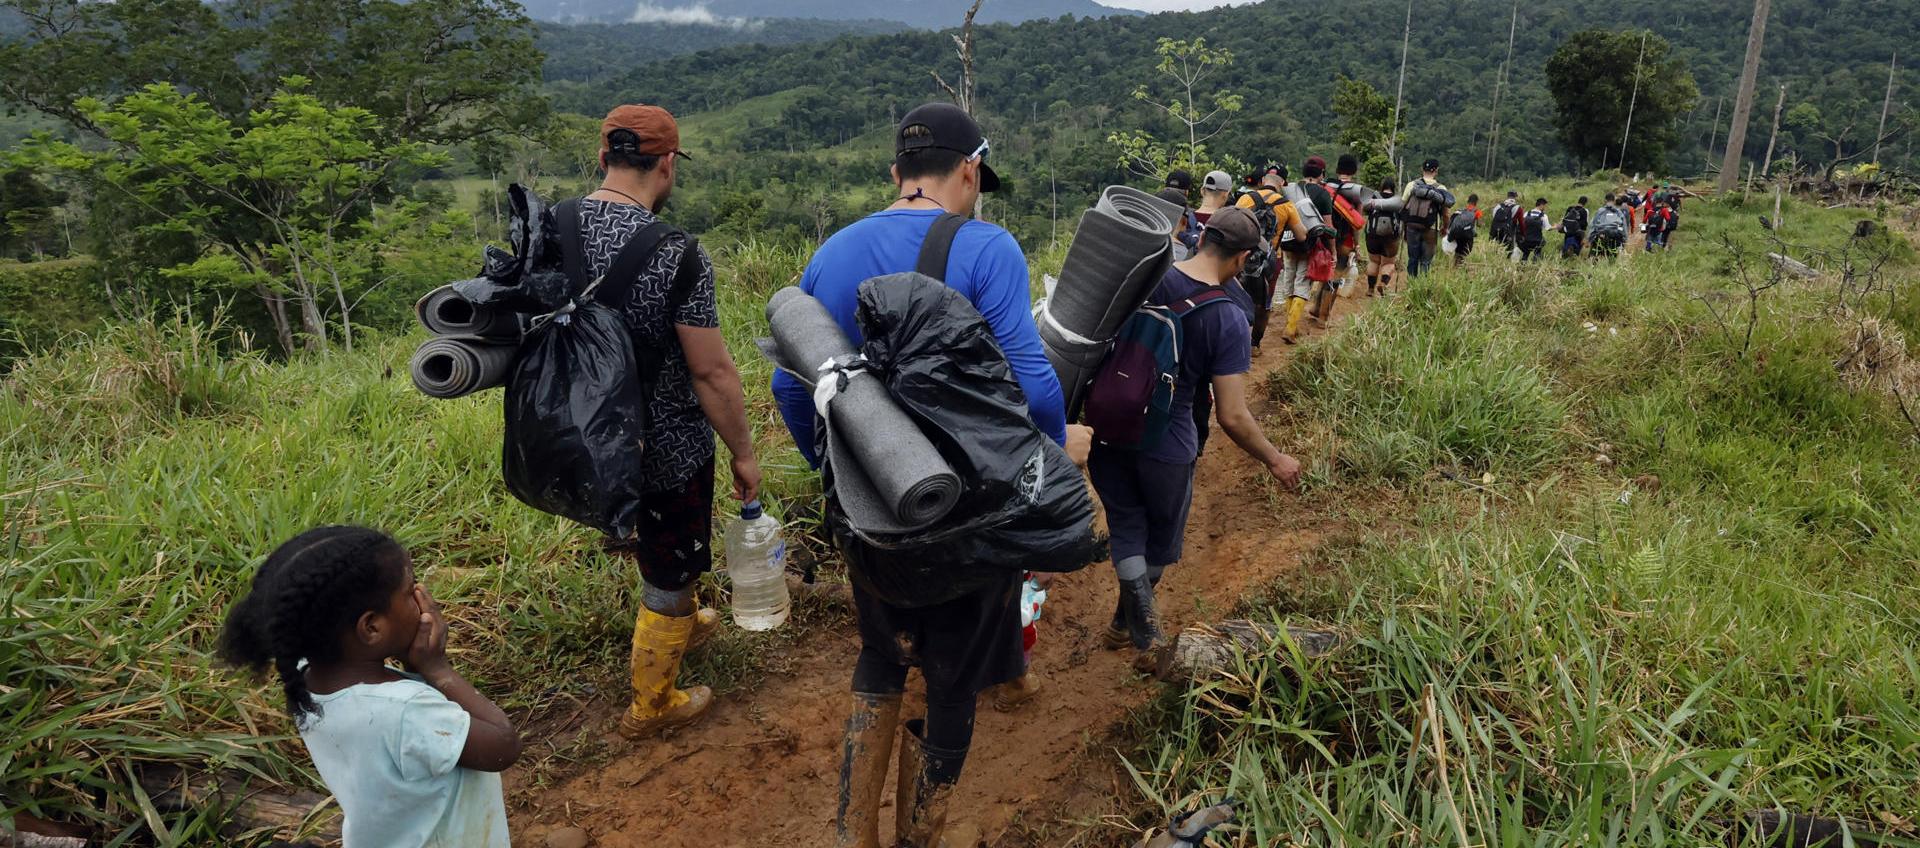 Migrantes atravesando la selva del Darién.